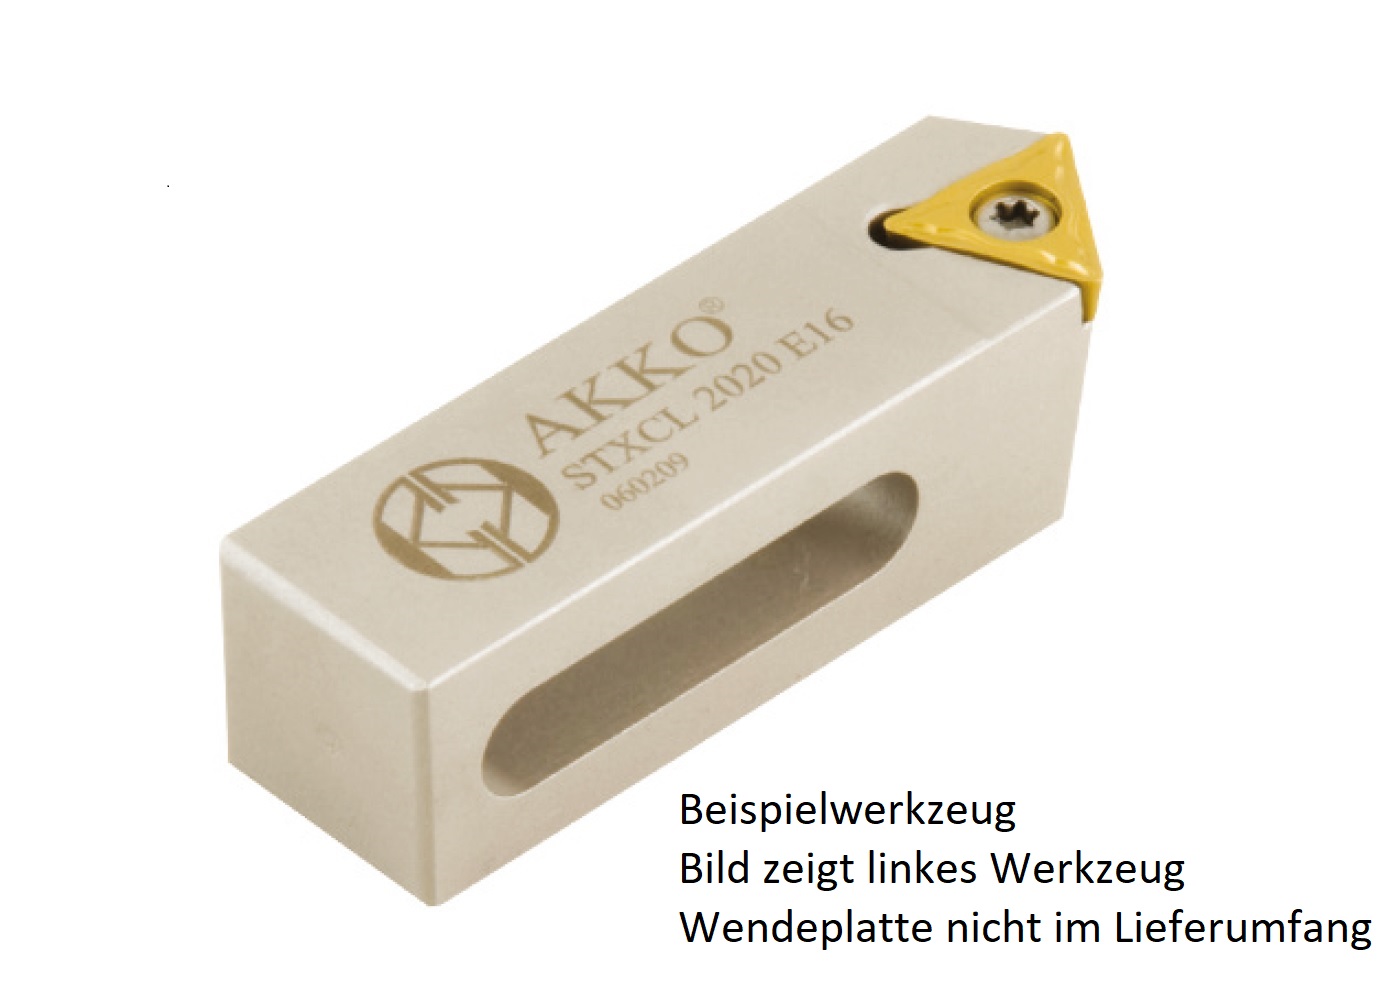 AKKO-Kurzdrehhalter 20 x 10 mm für ISO-WSP TC.. 16T3..
links